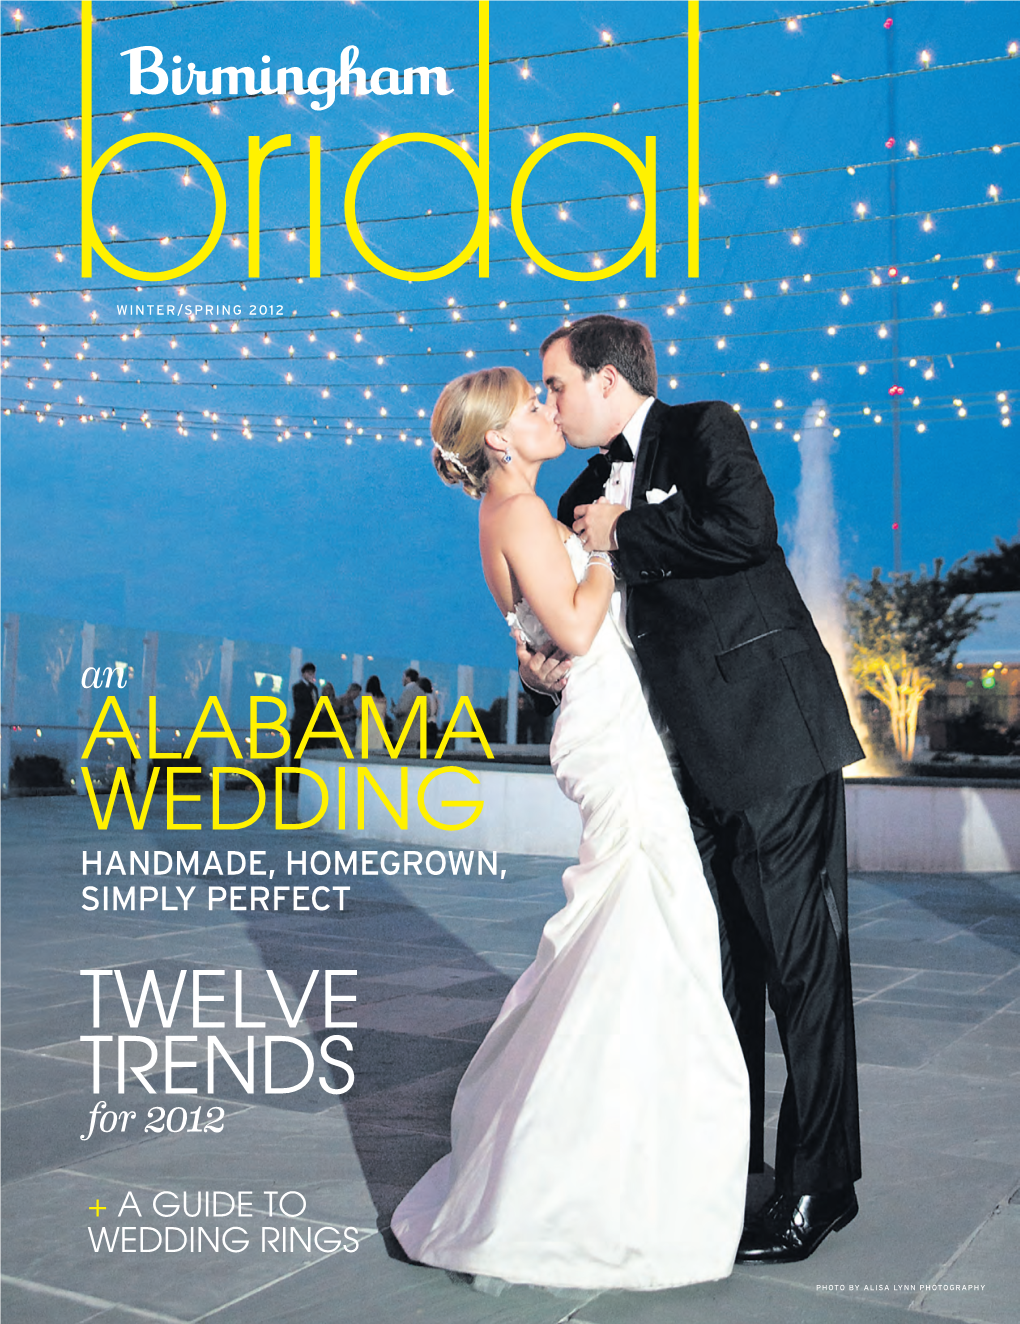 ALABAMA WEDDING HANDMADE, HOMEGROWN, SIMPLY PERFECT TWELVE TRENDS for 2012